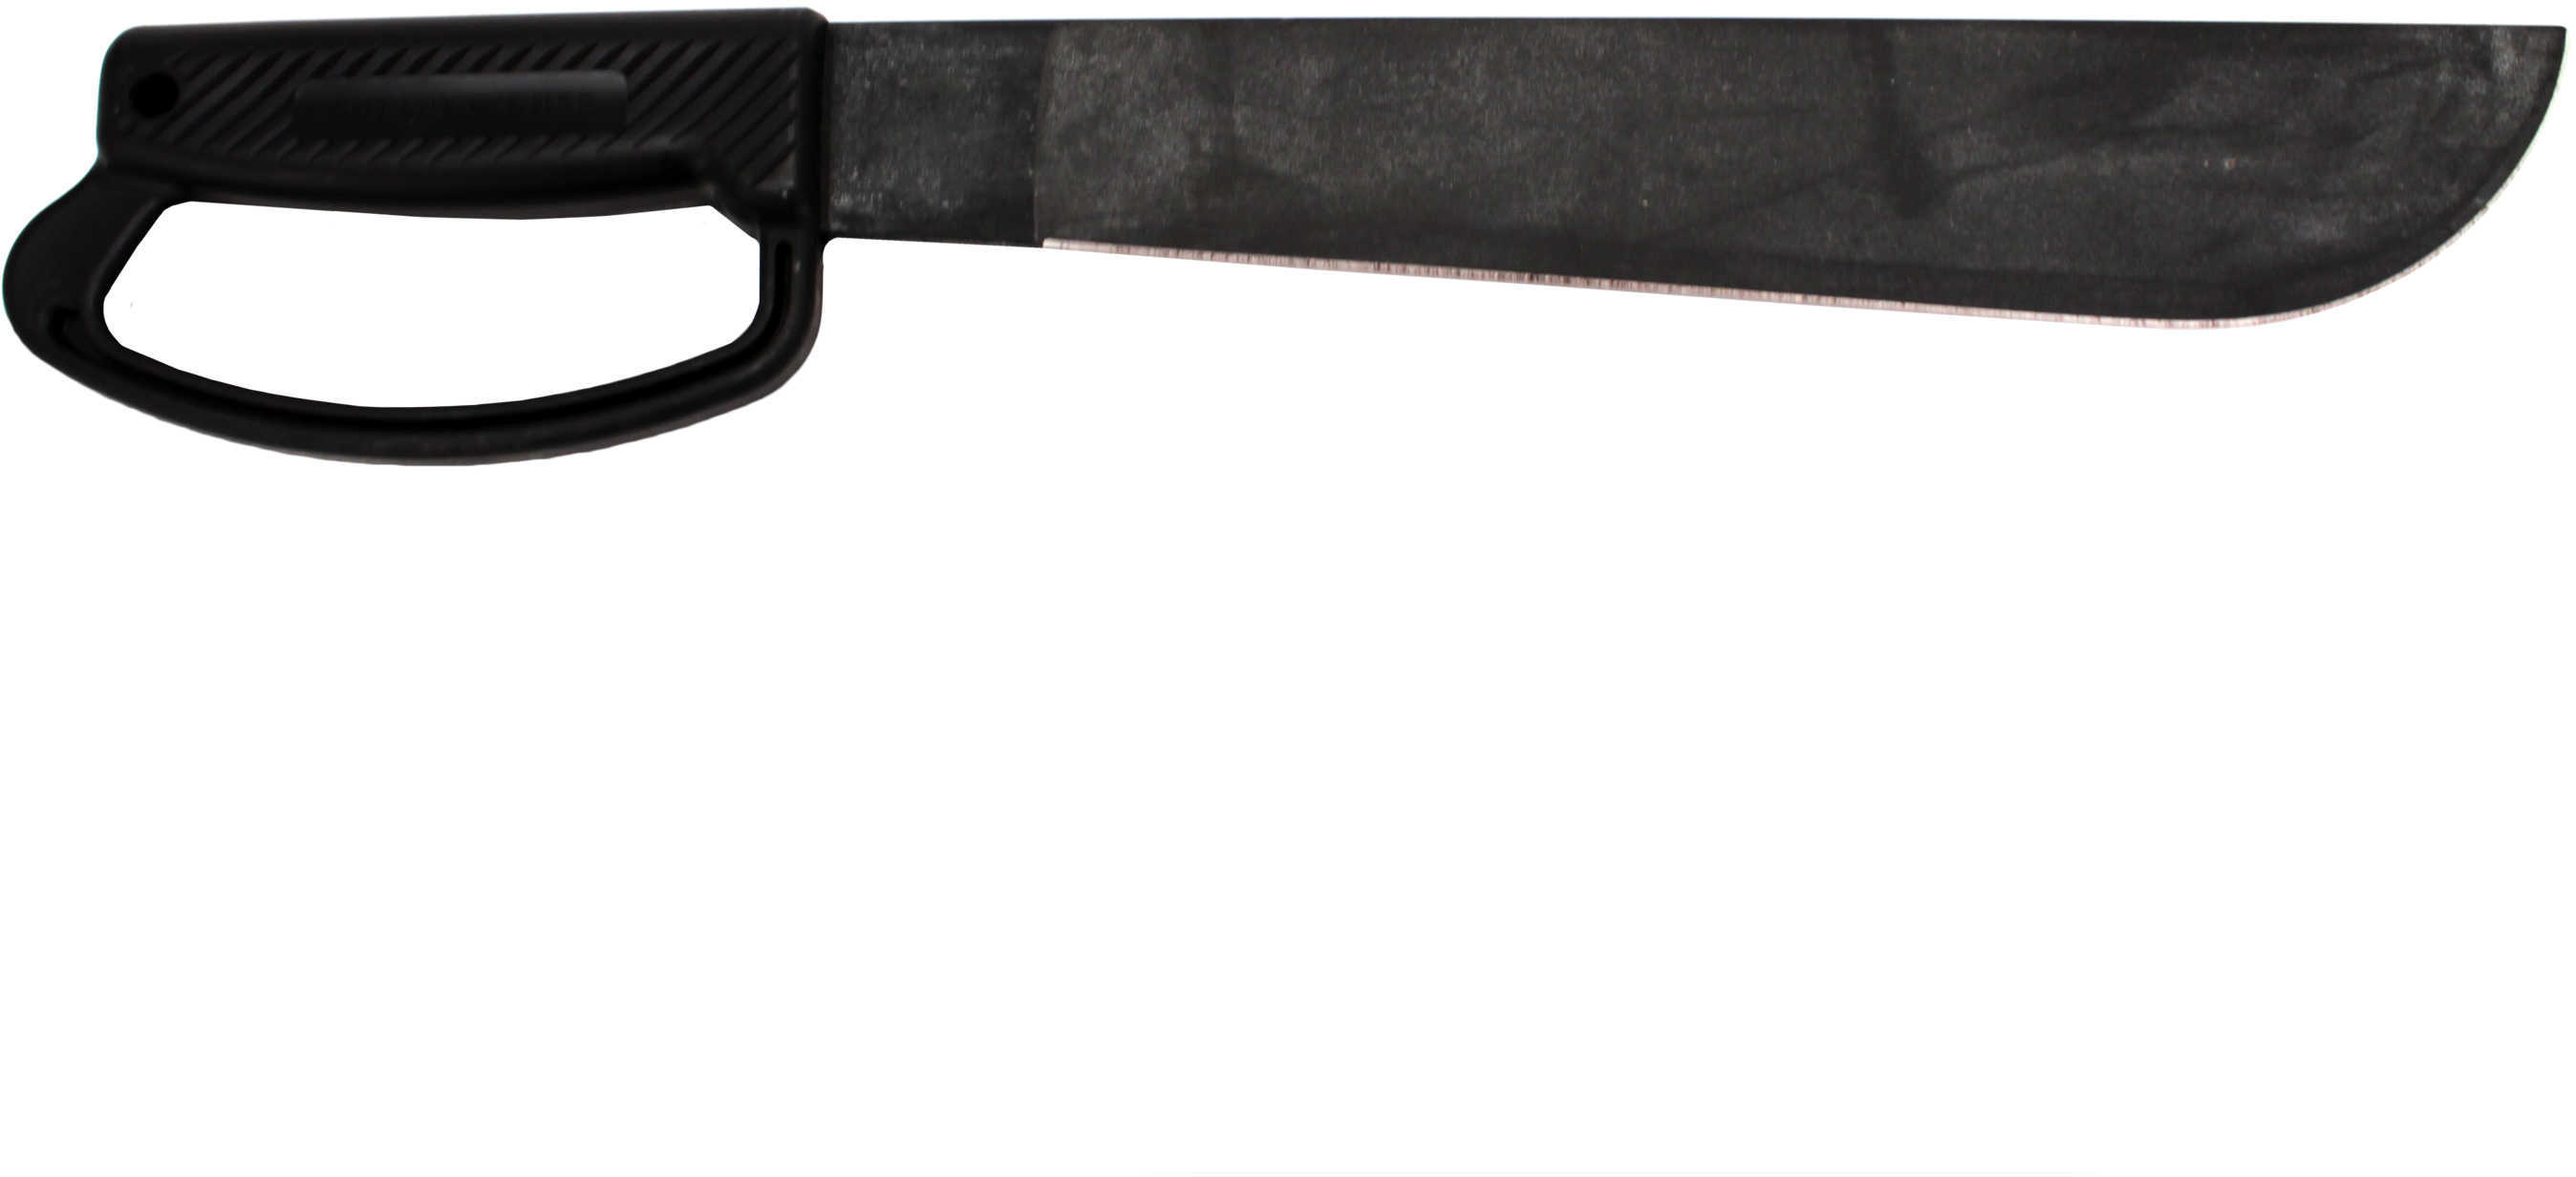 Ontario Knife Co OKC 12 Inch Camper Black D Handle Machete